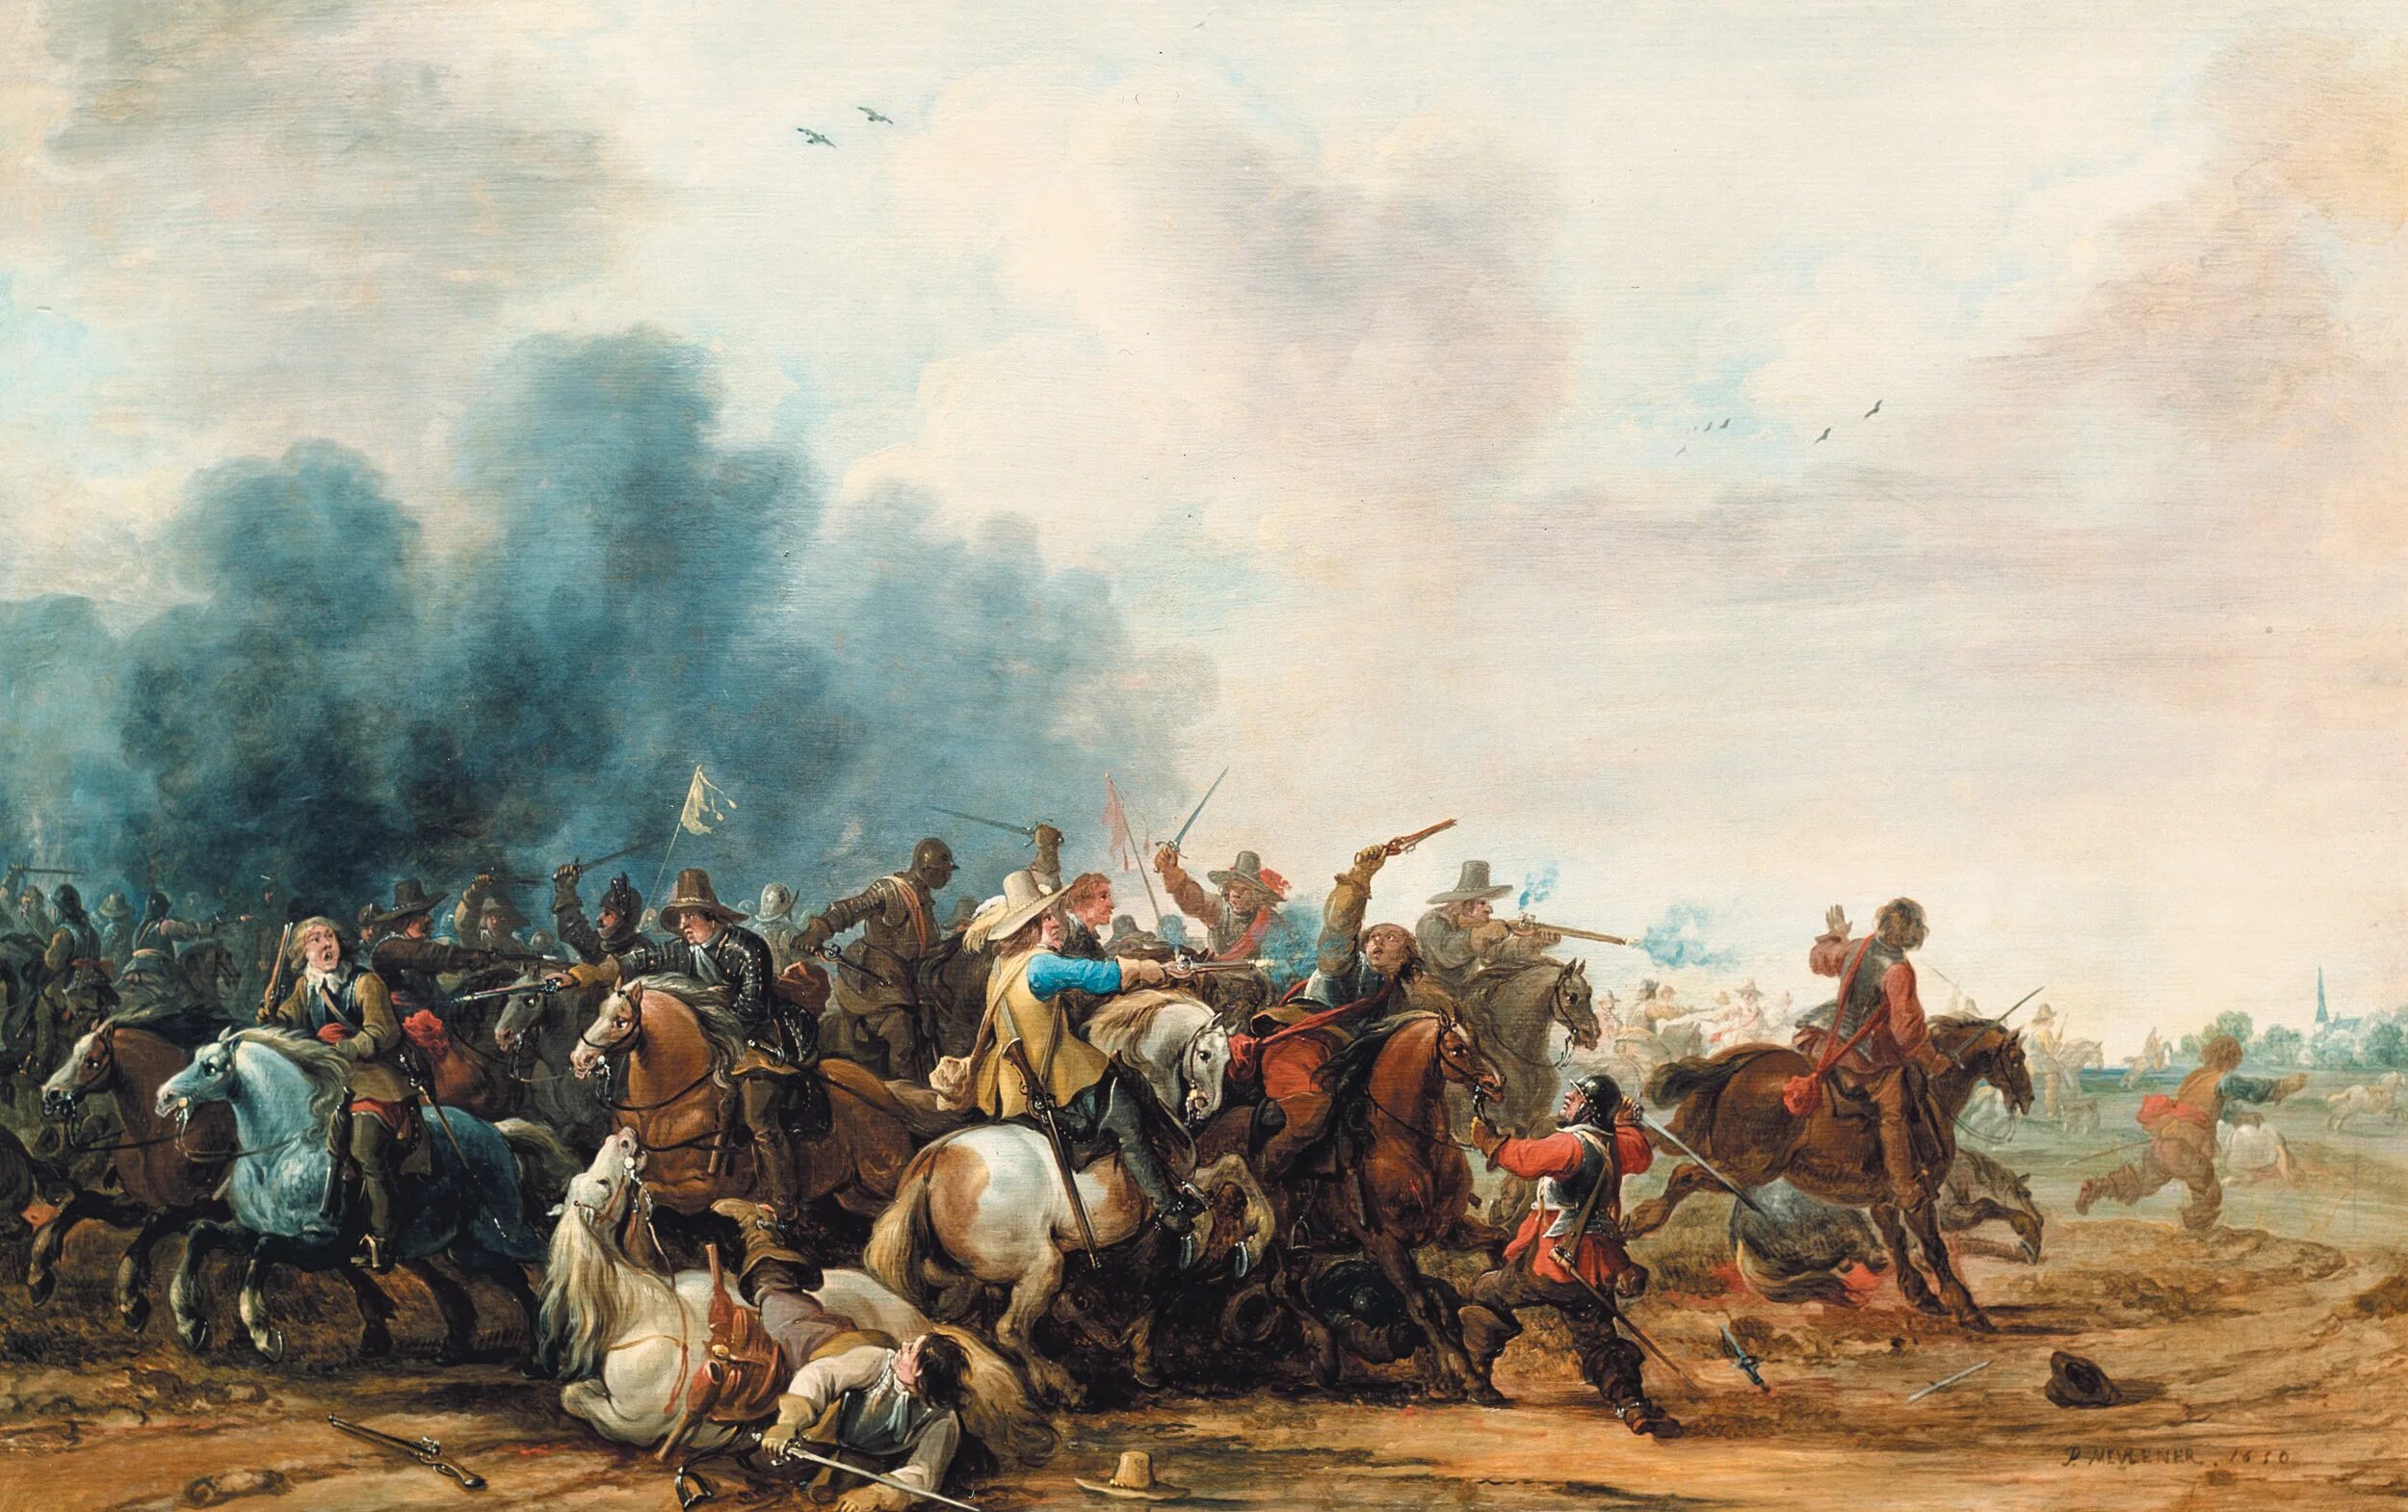 Оливер Кромвель битва при Нейзби. Сражение при Нейзби в Англии 1645. Битва Рокруа 1643. Революция в Англии 1640. 3 революции в англии